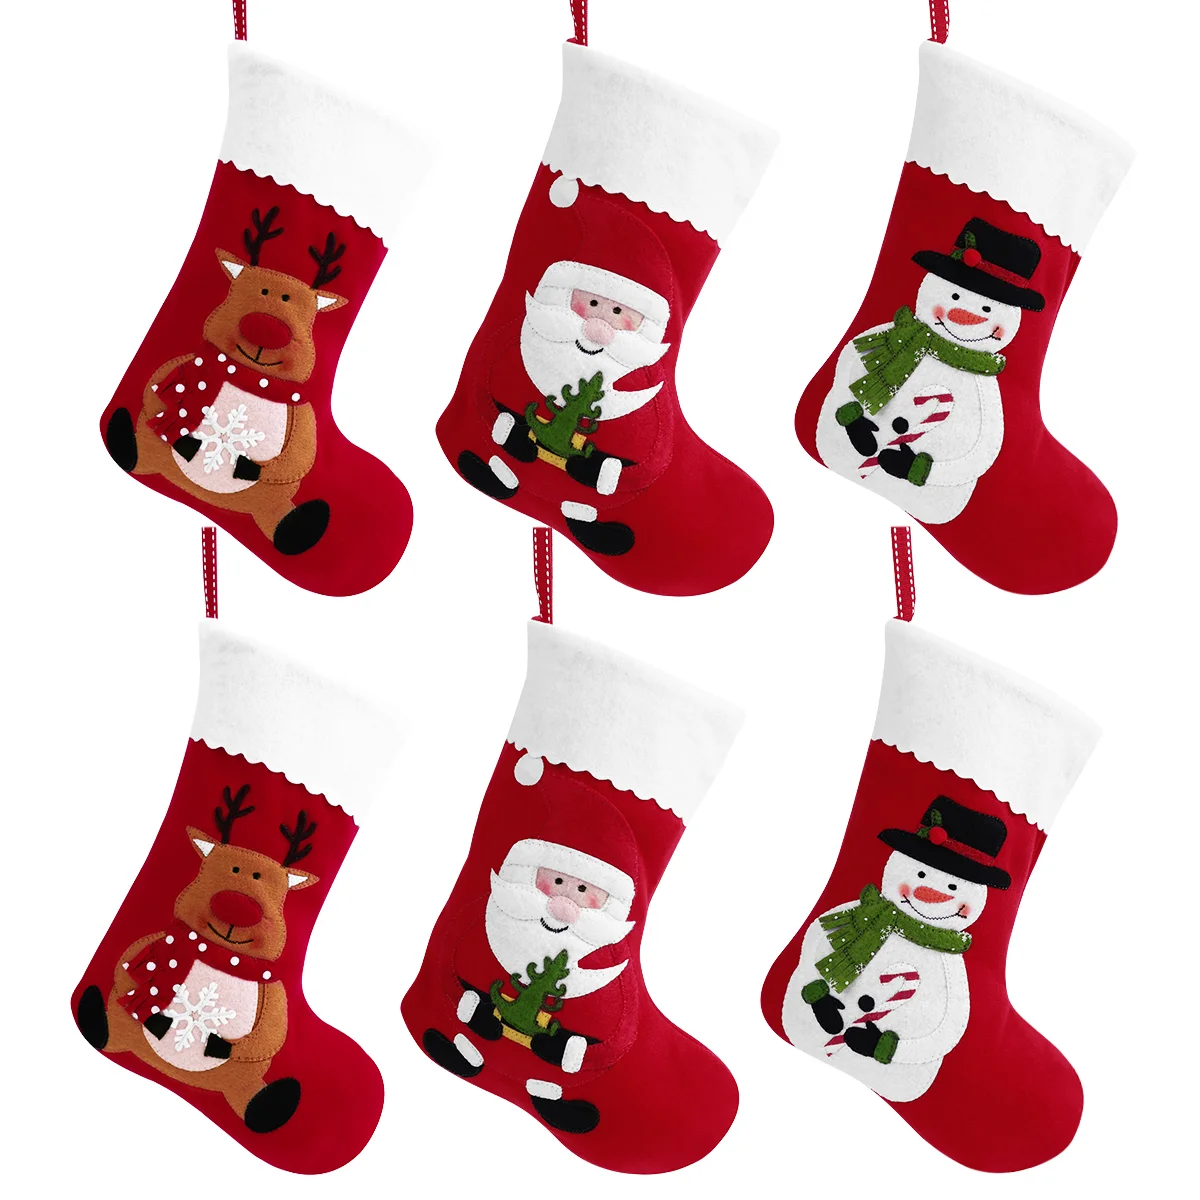 

Christmas Stocking Candy Bag Santa Claus Snowman Reindeer Cookietreat Gift Bag Hanging Xmas Socks Stocking Pendant for Holiday